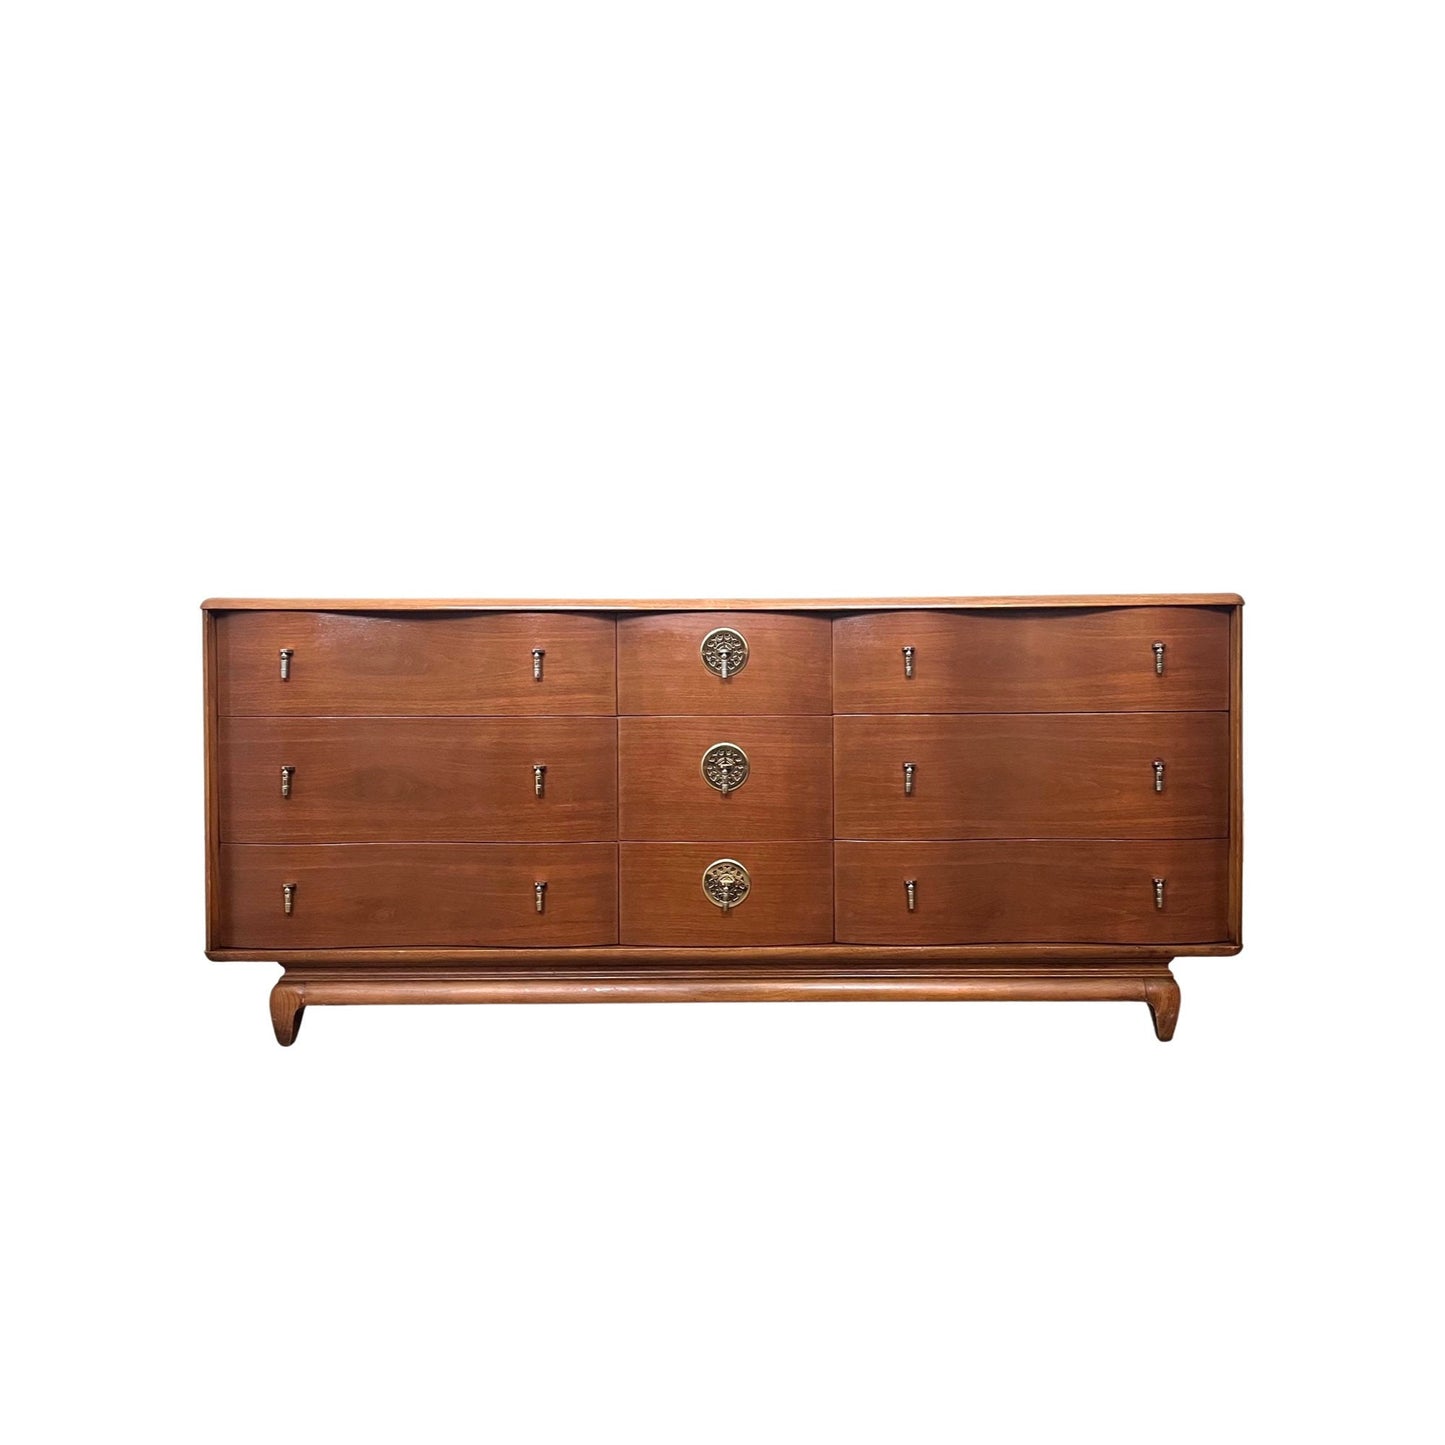 Kent Coffey “The Penthouse” Mid Century Modern 9 Drawer Long Dresser c. 1960s